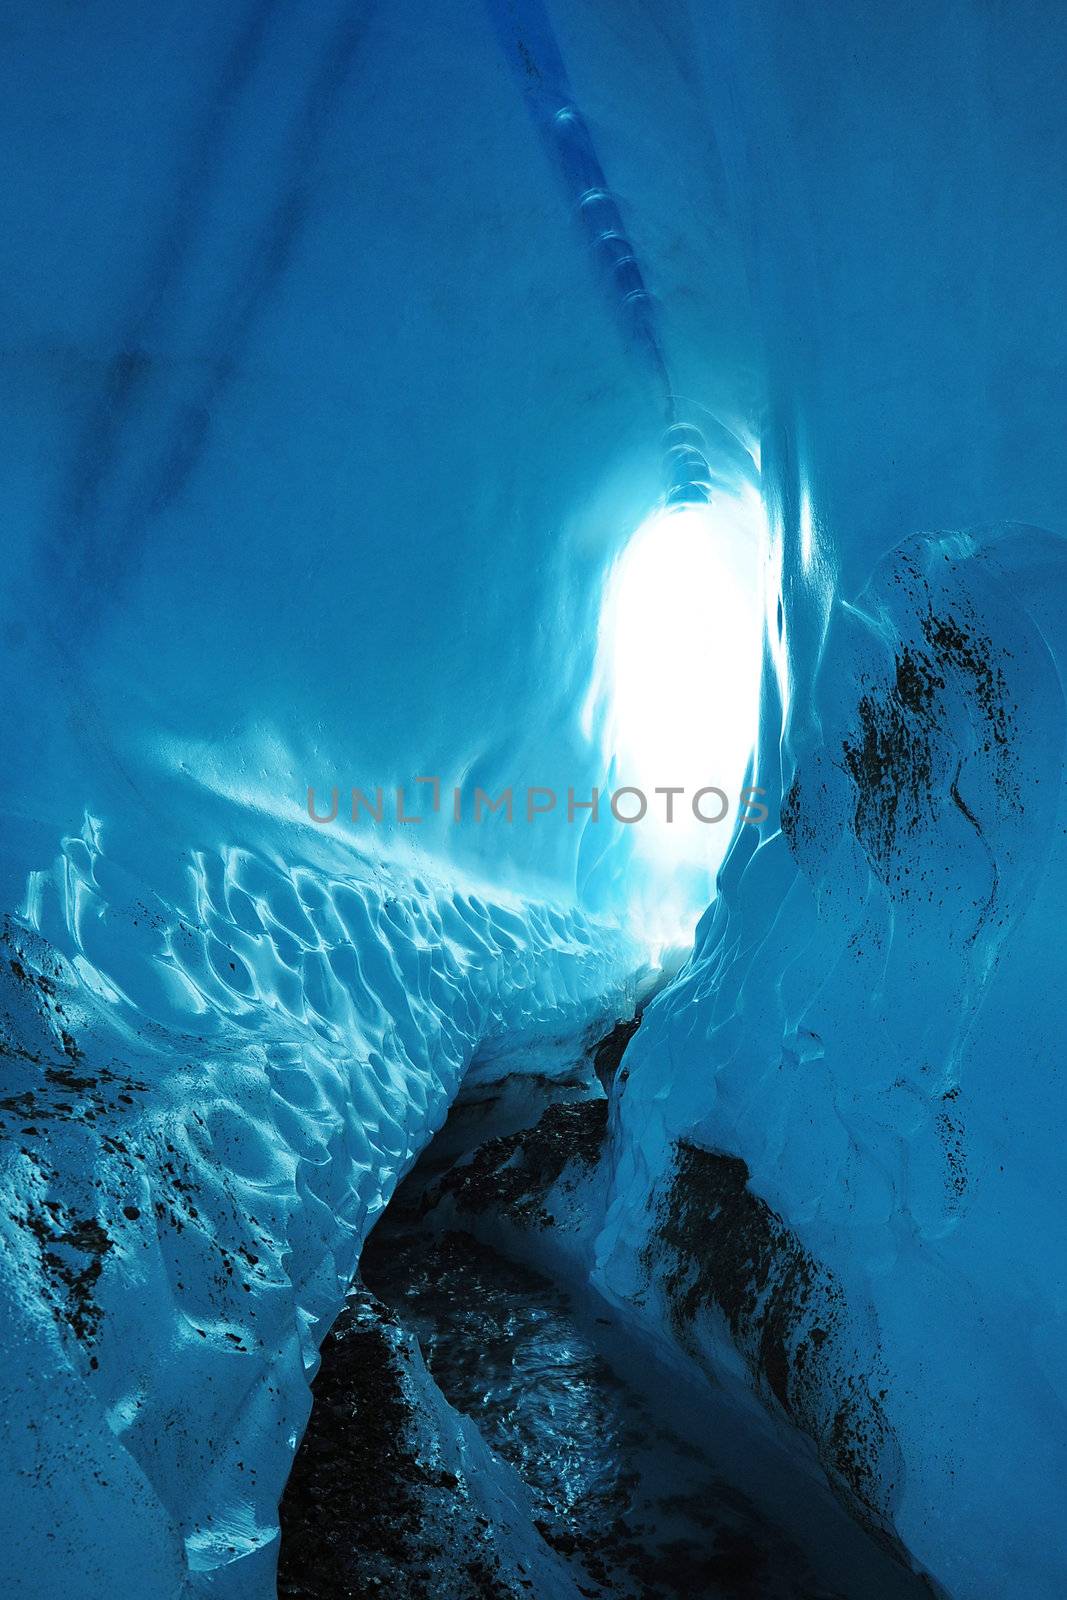 Ice cave by porbital